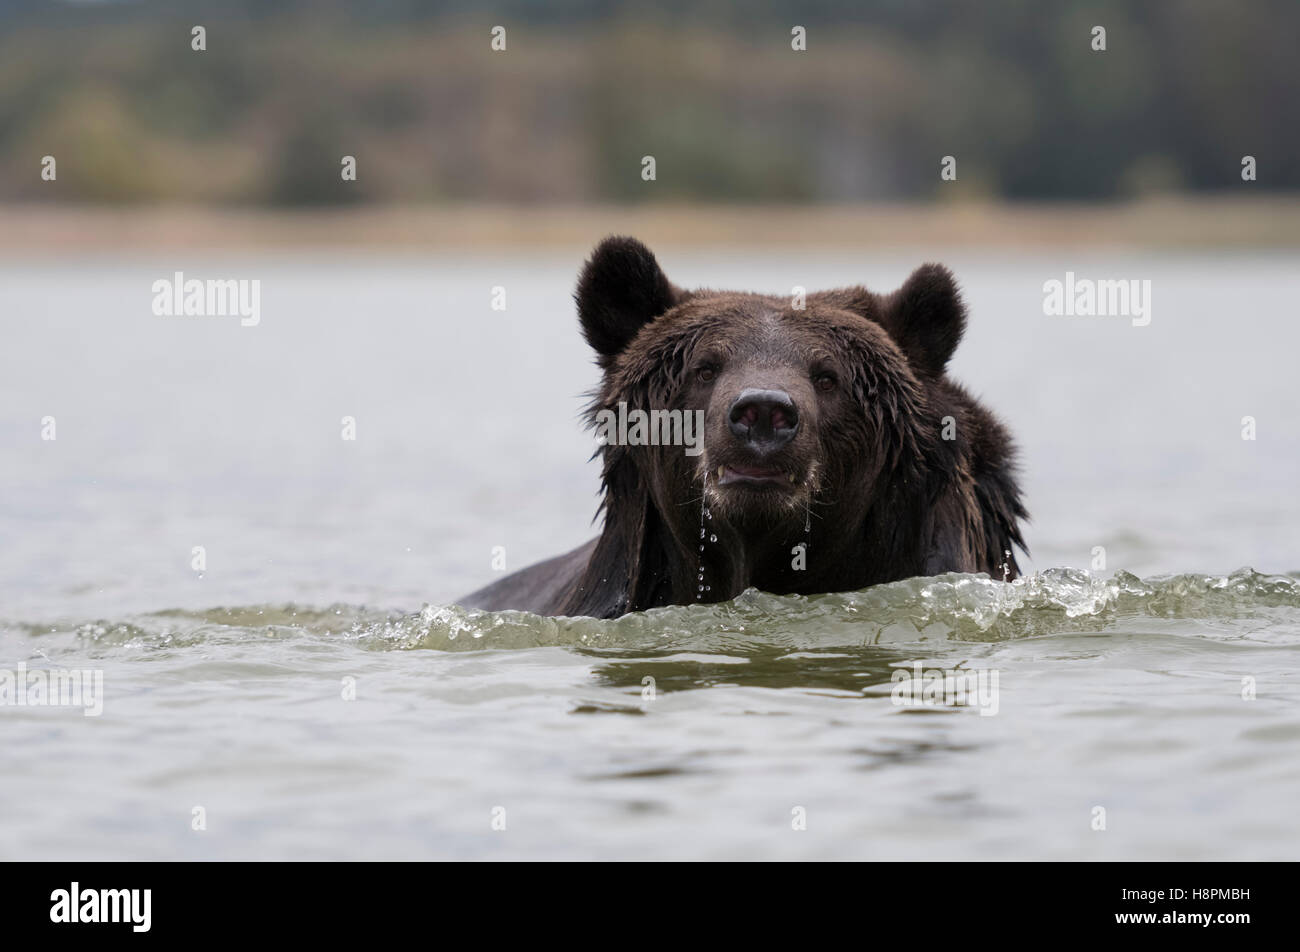 Eurasian orso bruno / Europaeischer Braunbaer ( Ursus arctos ) in esecuzione in acque profonde, si avvicina, adulto, Scatto frontale. Foto Stock